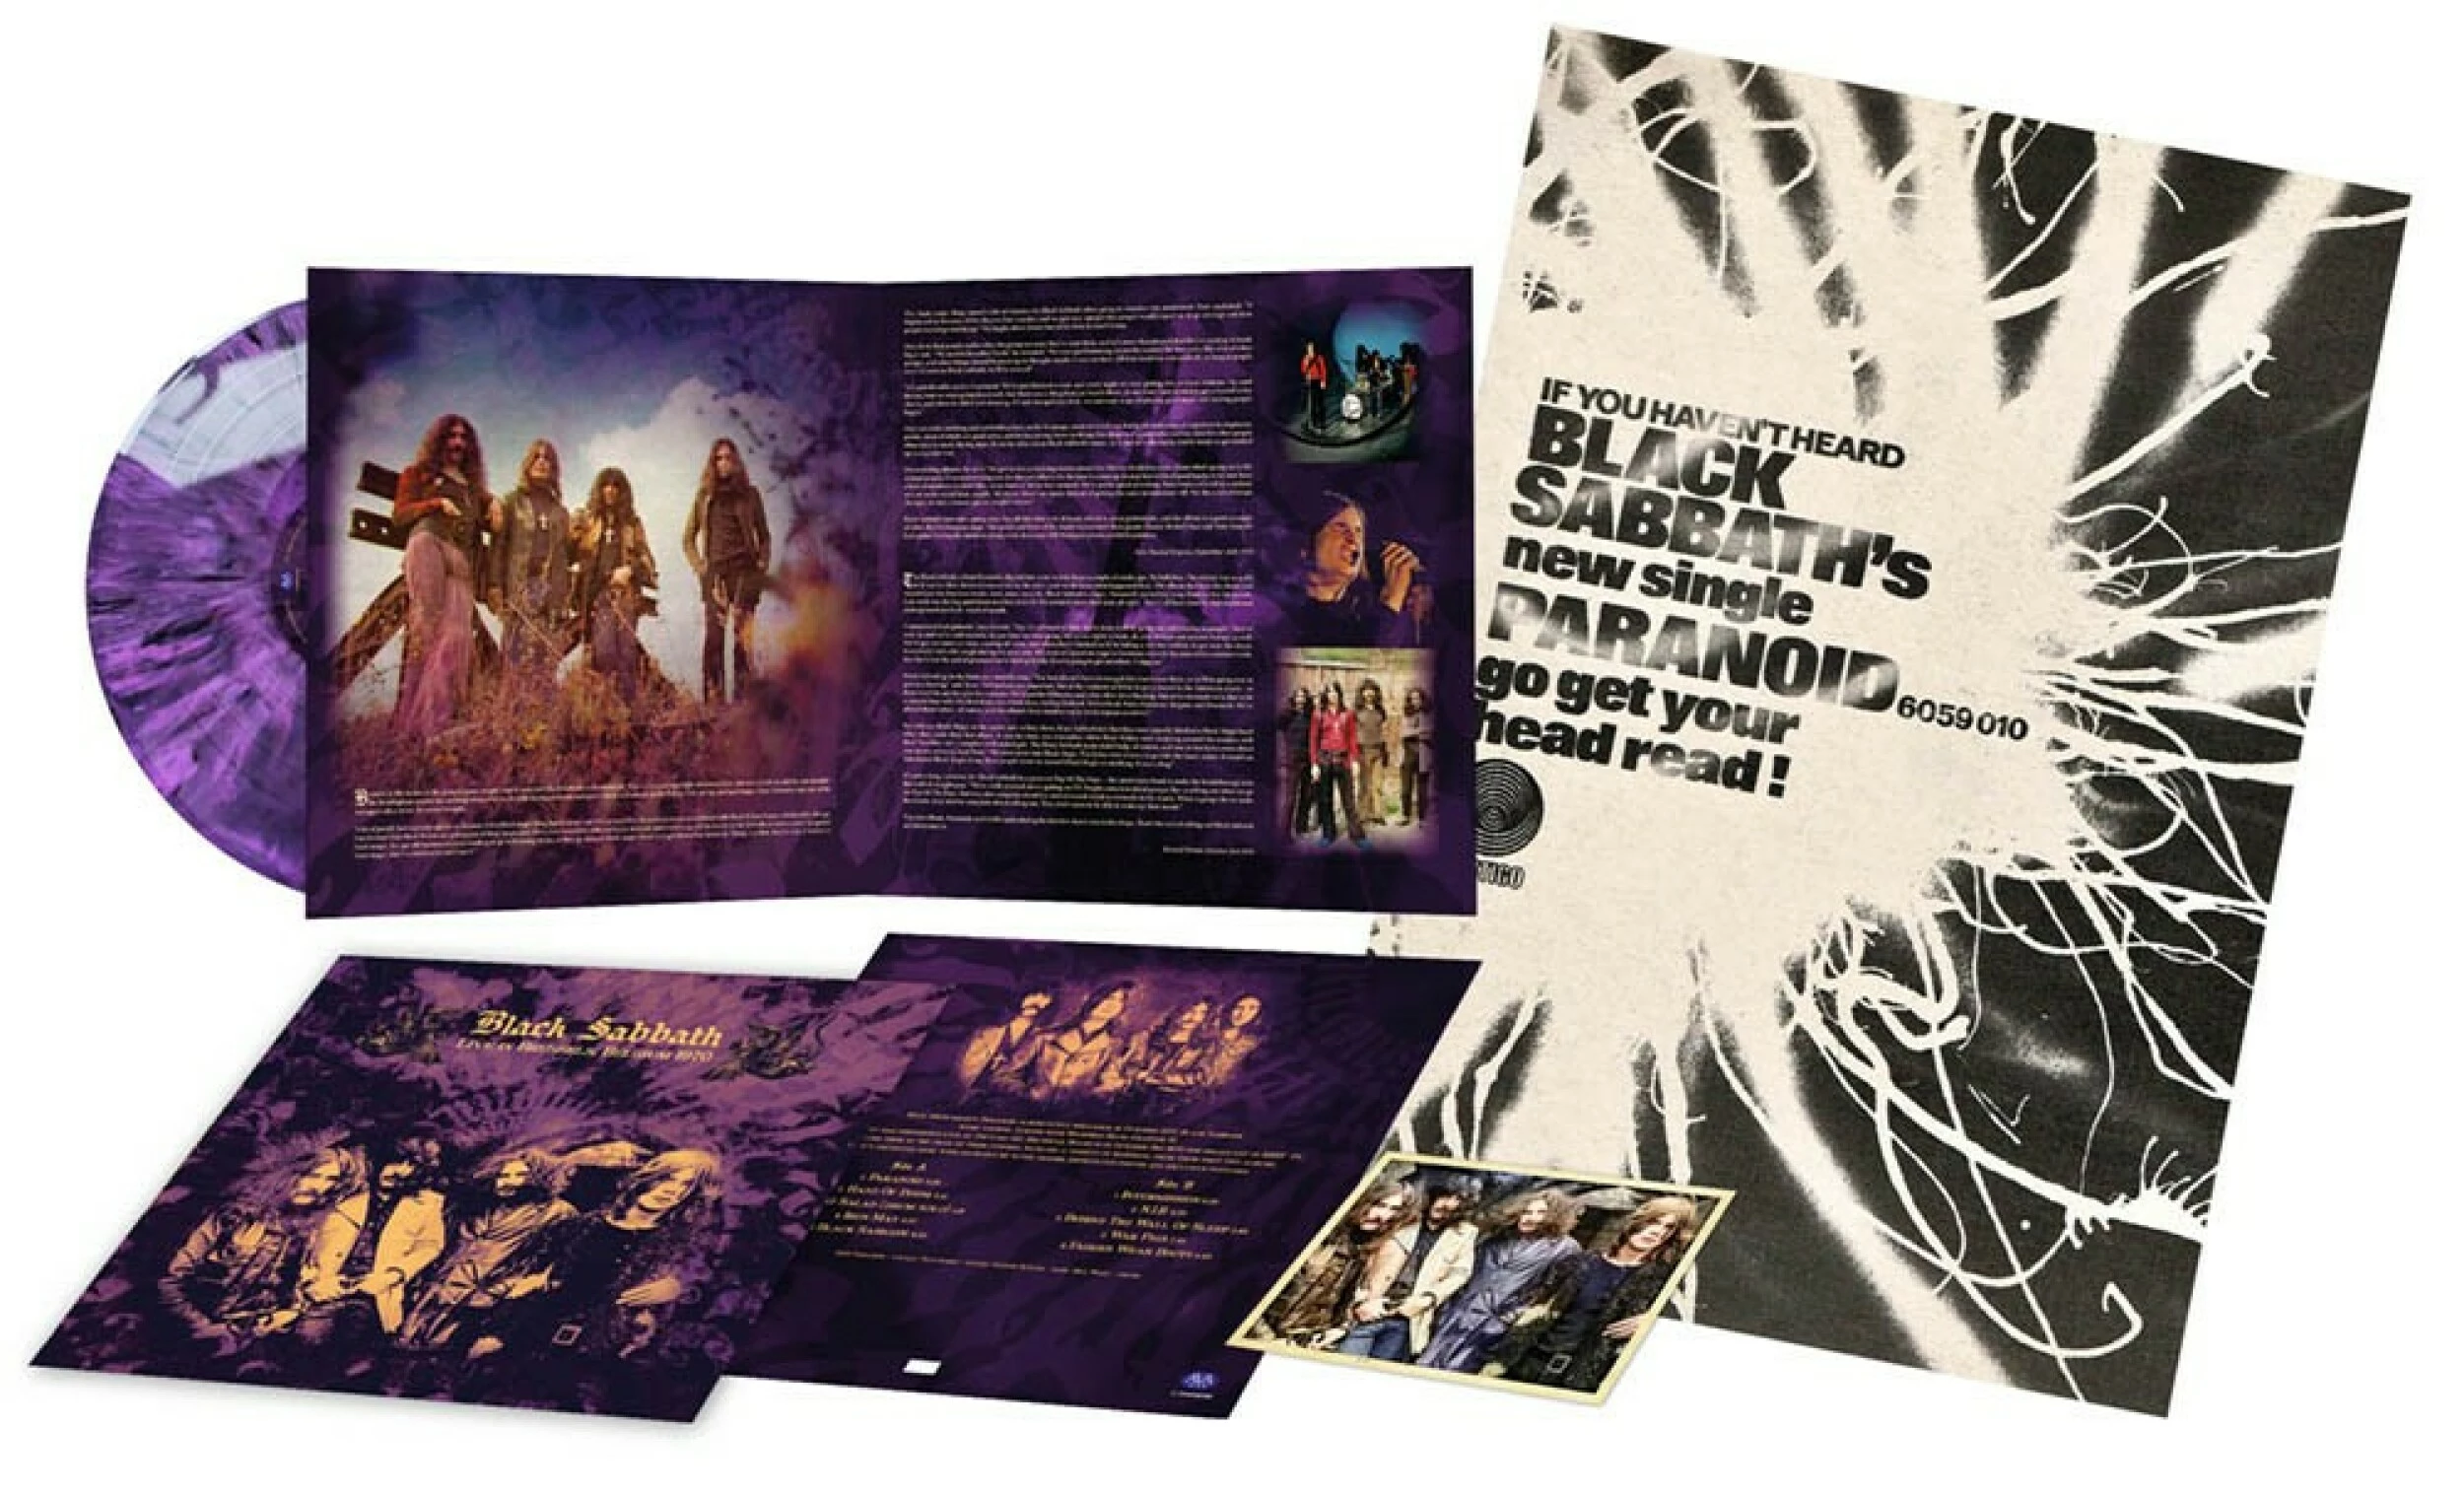 BLACK SABBATH - Live In Brussels 1970 [MARBLED PURPLE LP]